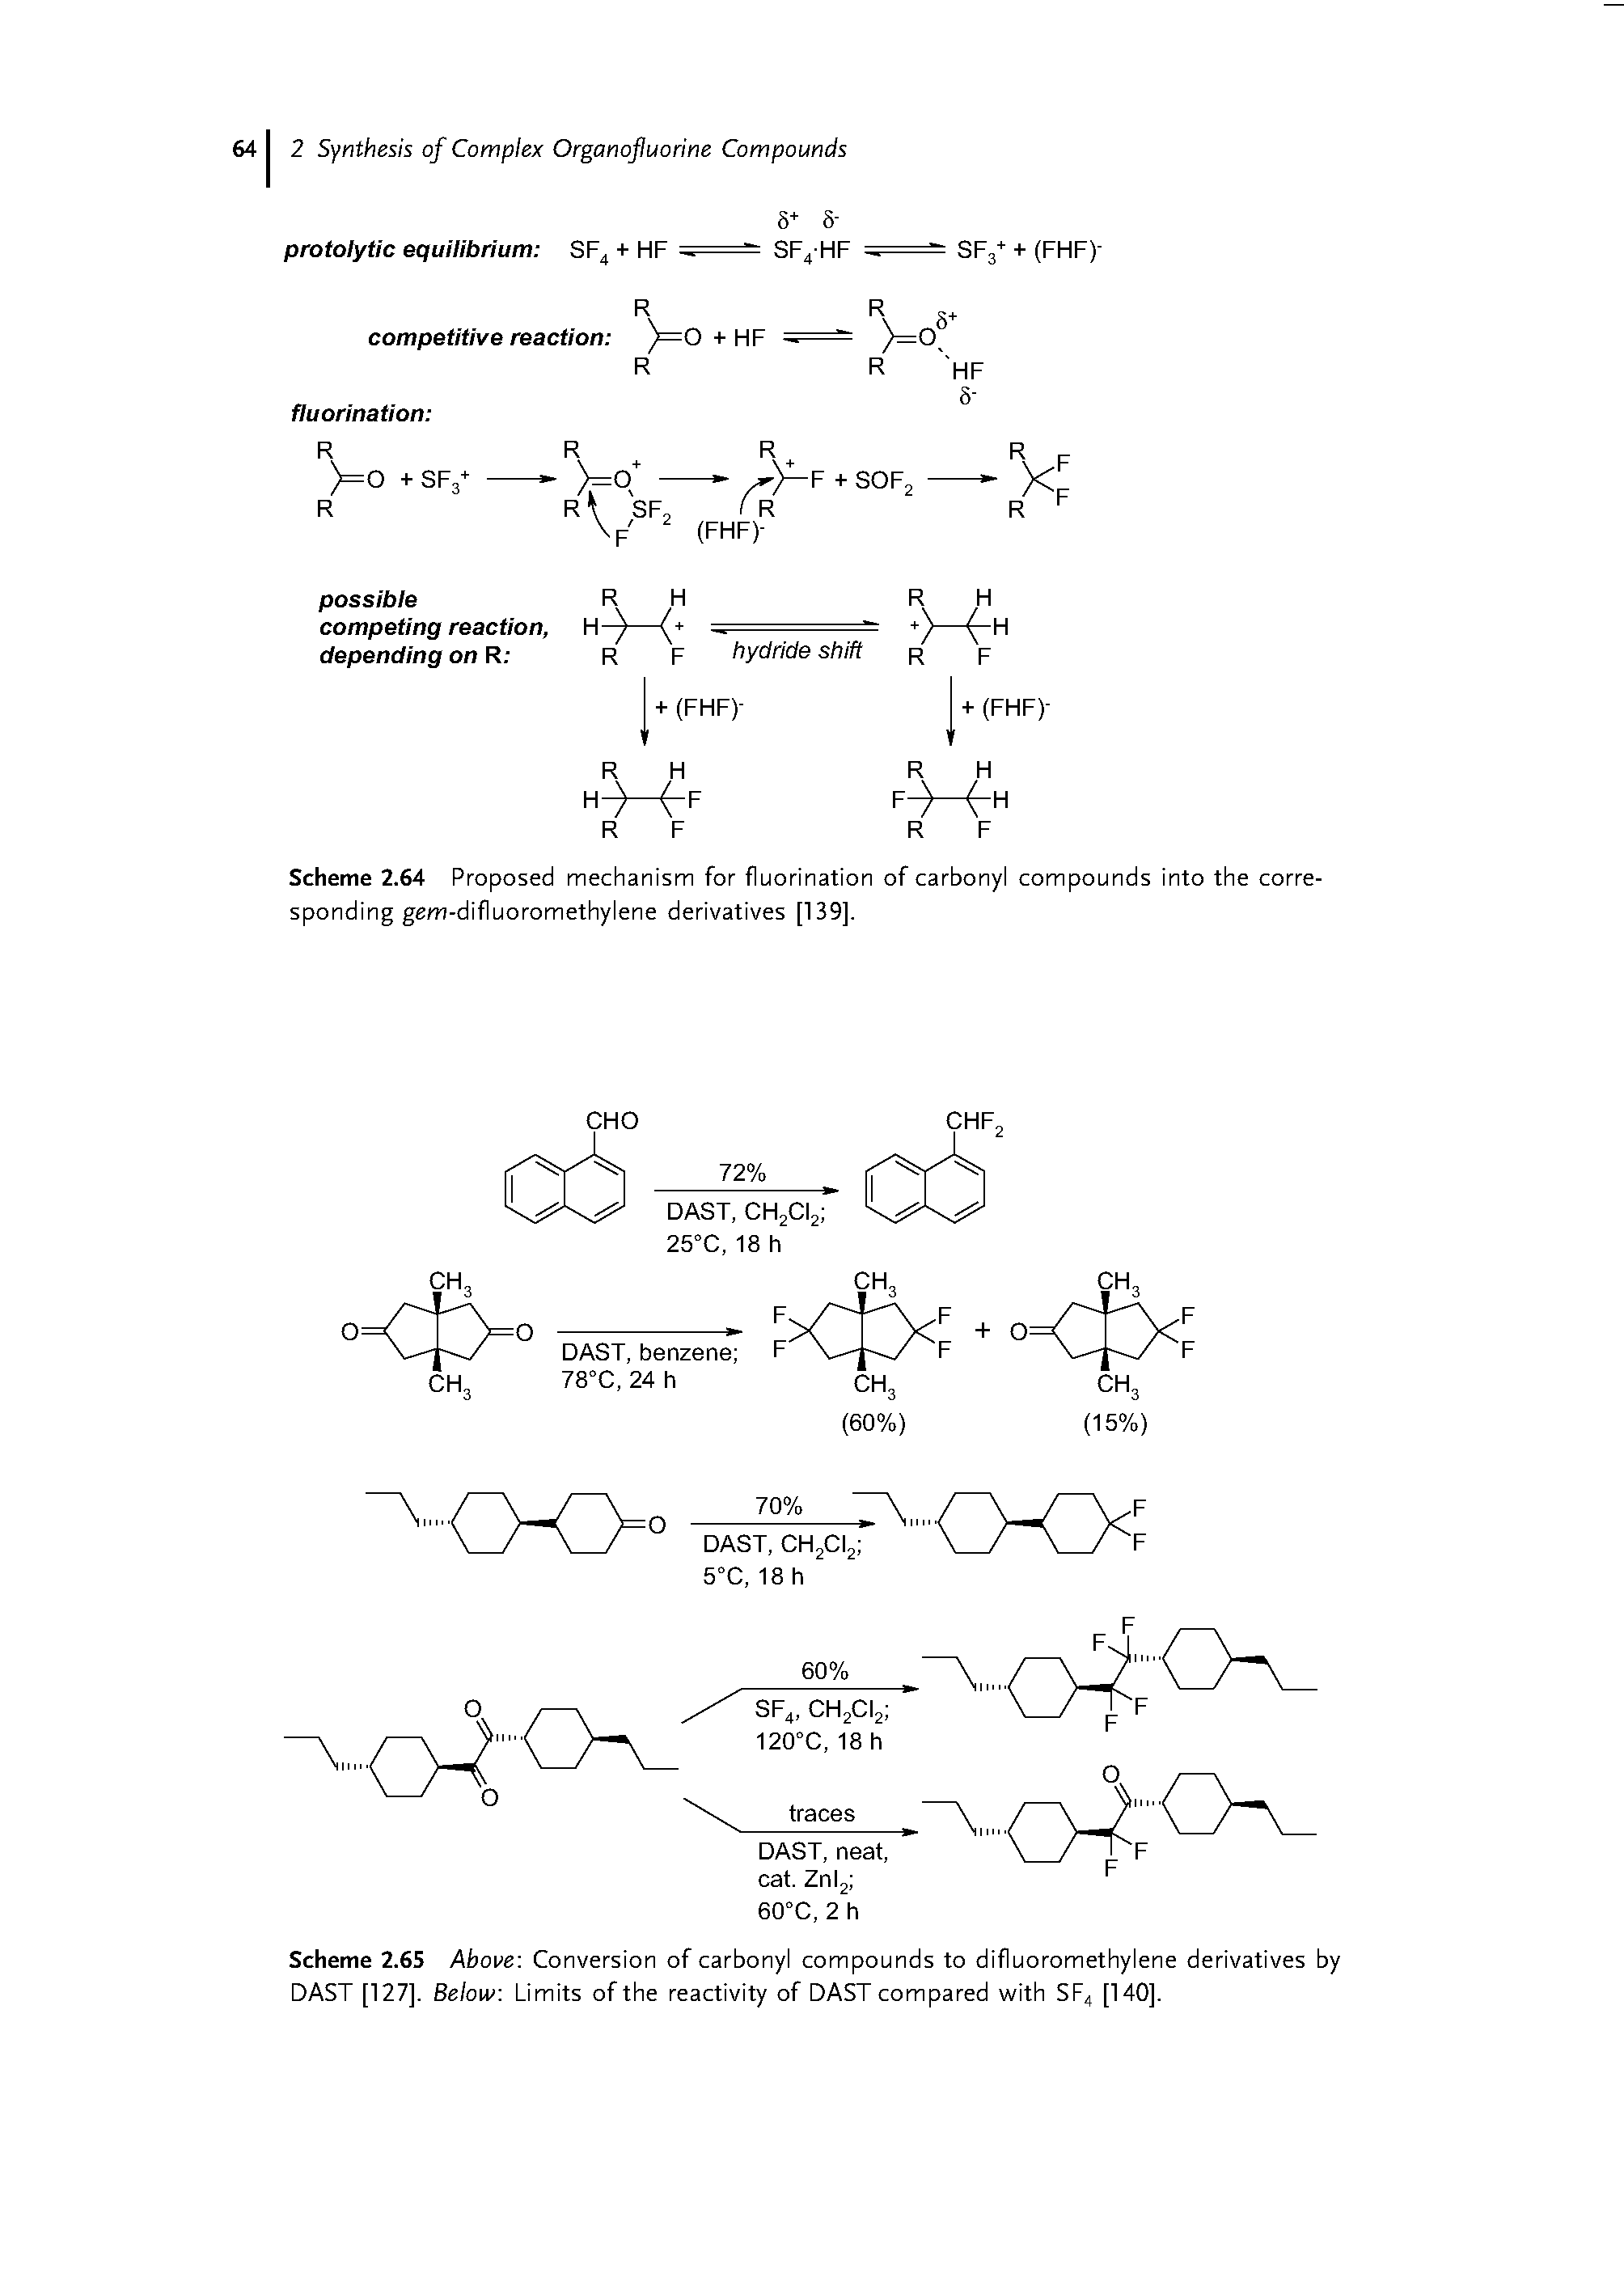 Scheme 2.64 Proposed mechanism for fluorination of carbonyl compounds into the corresponding gem-difluoromethylene derivatives [139].